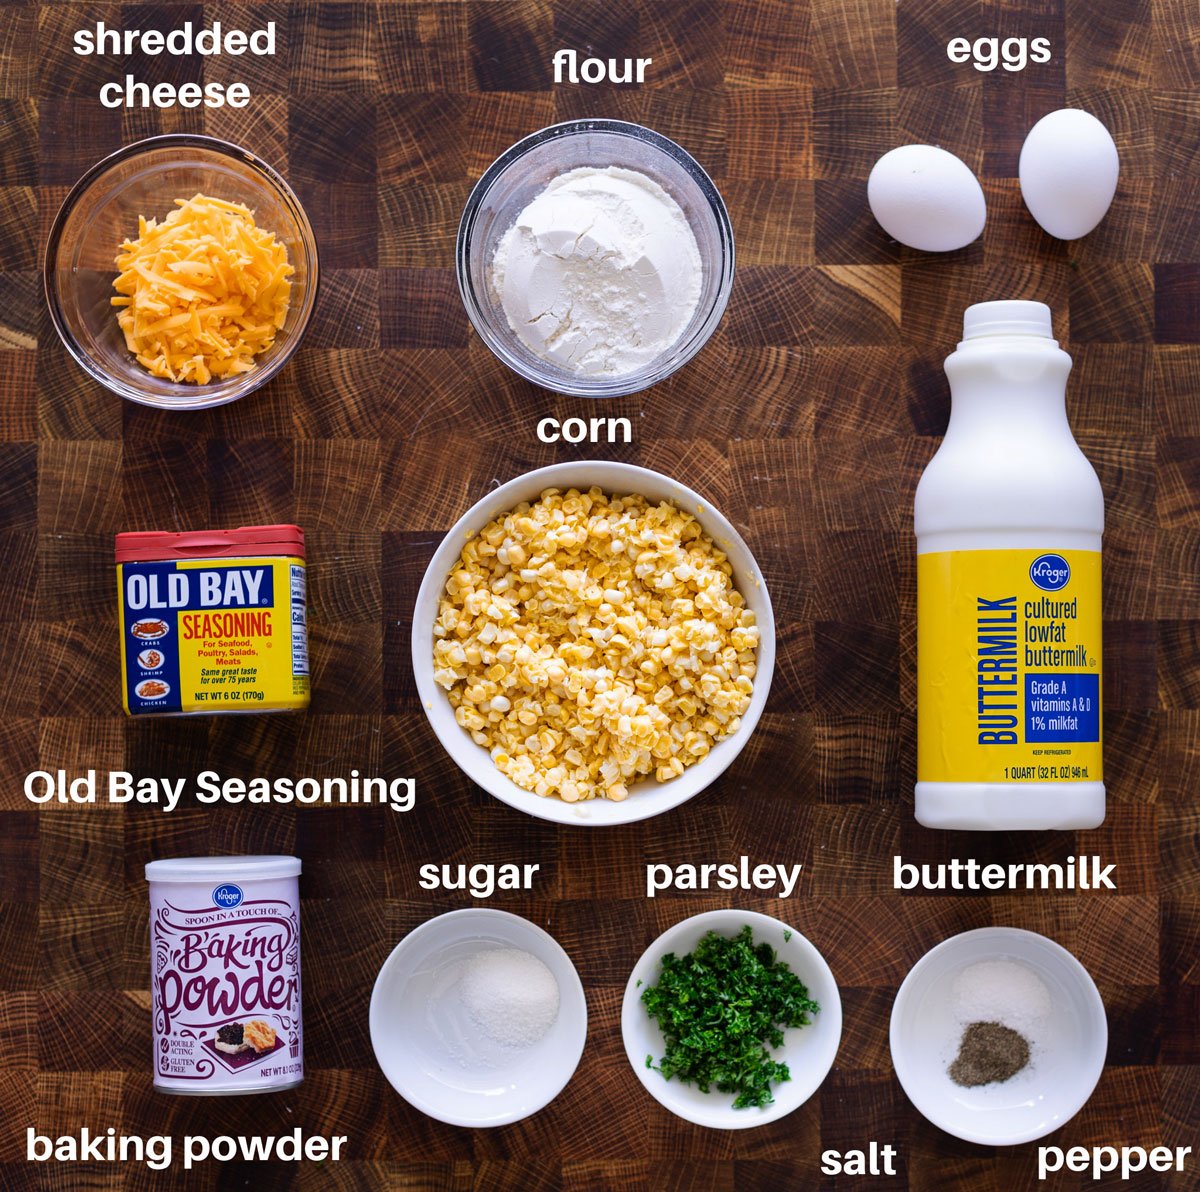 Ingredients you'll need to make Corn Fritters: Cheddar cheese, flour, eggs, buttermilk, corn, Old Bay seasoning, baking powder, sugar, parsley, salt, pepper. 